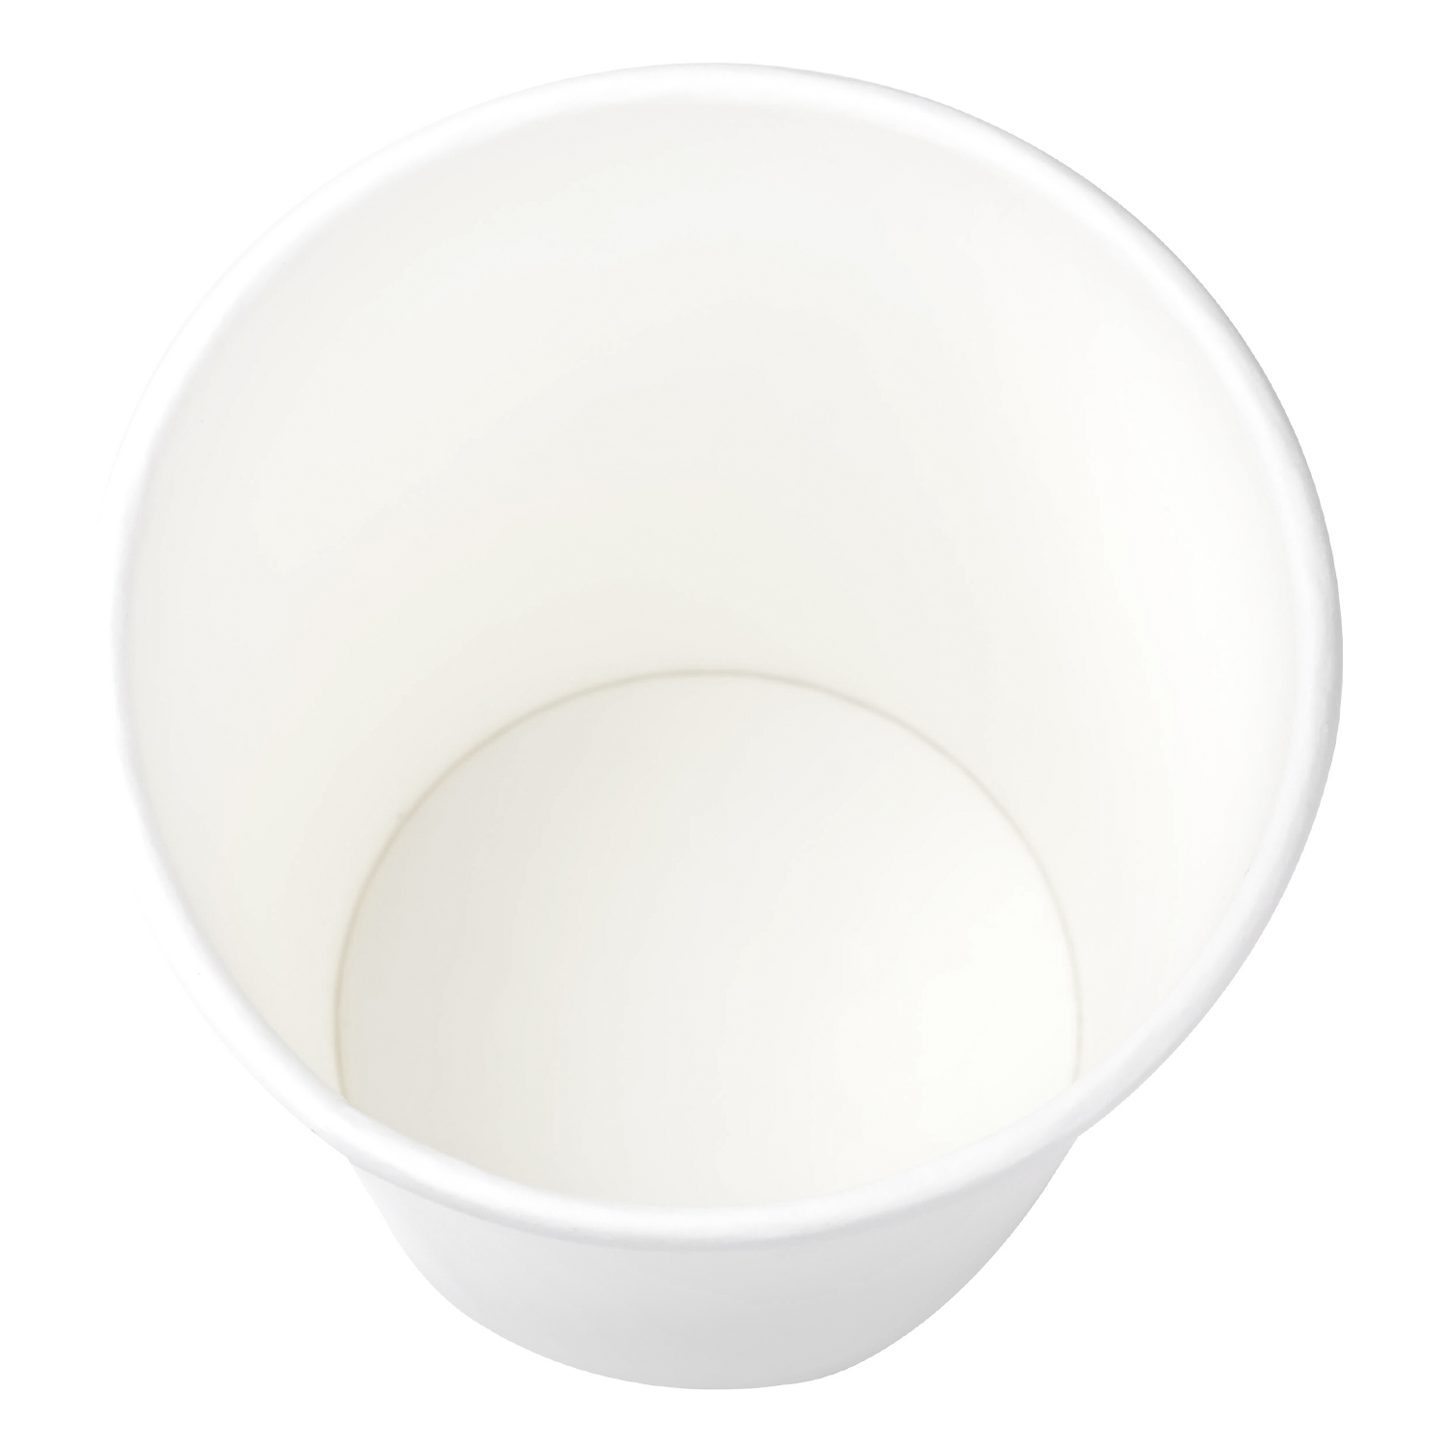 Karat 10oz Paper Hot Cups - White (90mm) - 1,000 ct